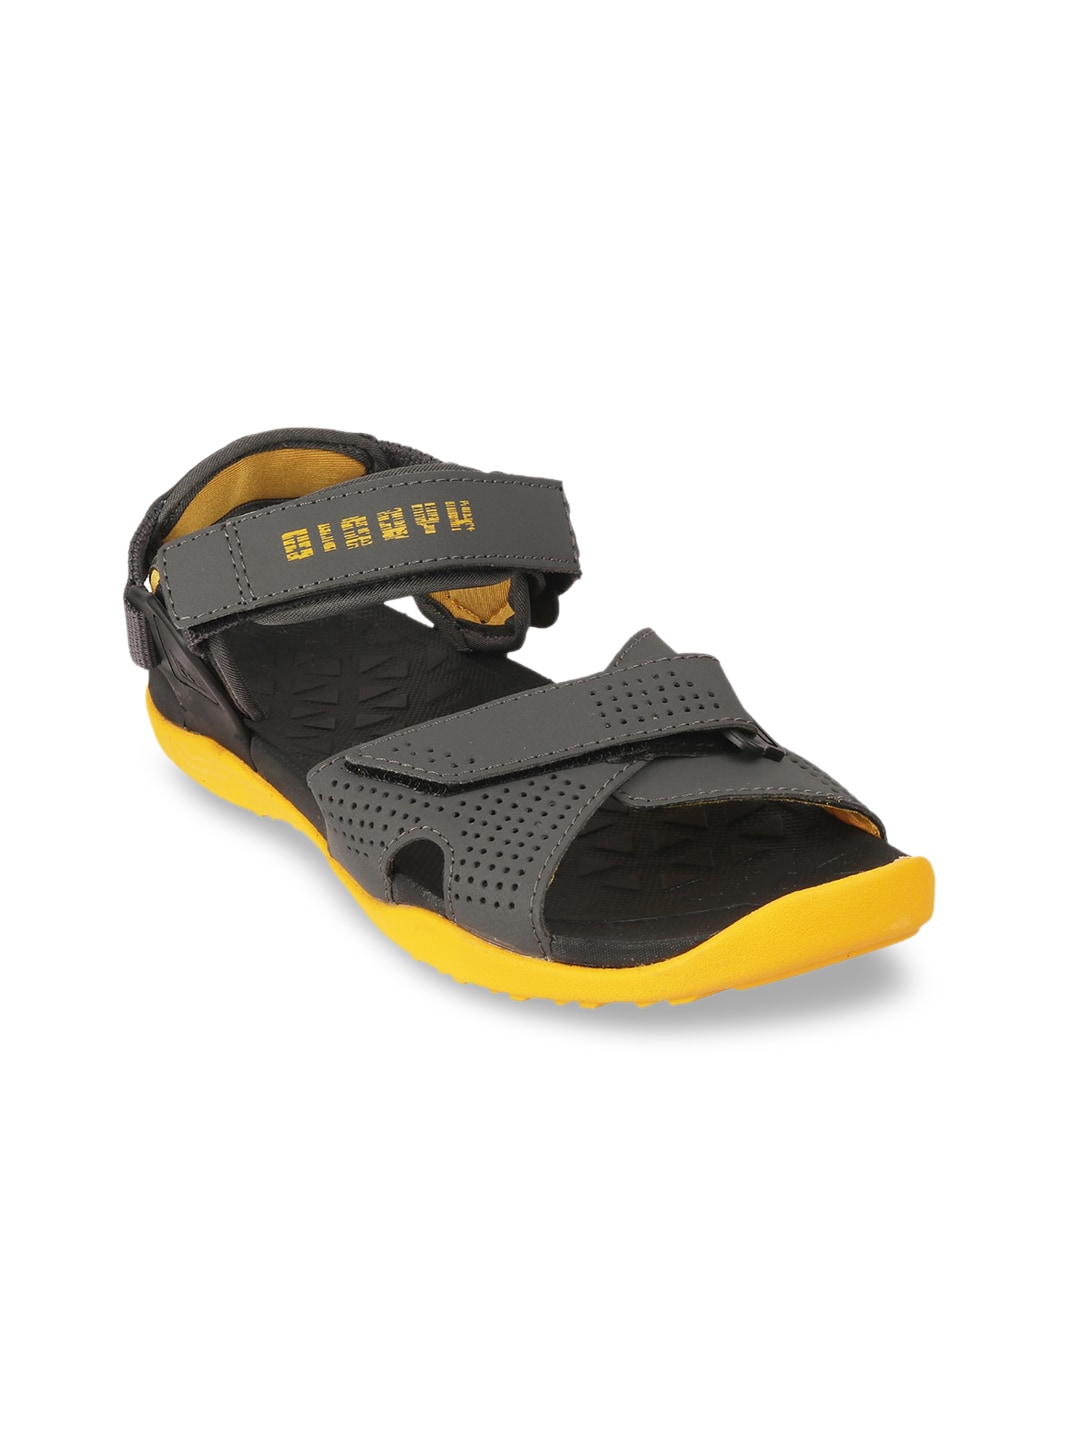 Vento Unisex Grey & Yellow Sports Sandals Price in India